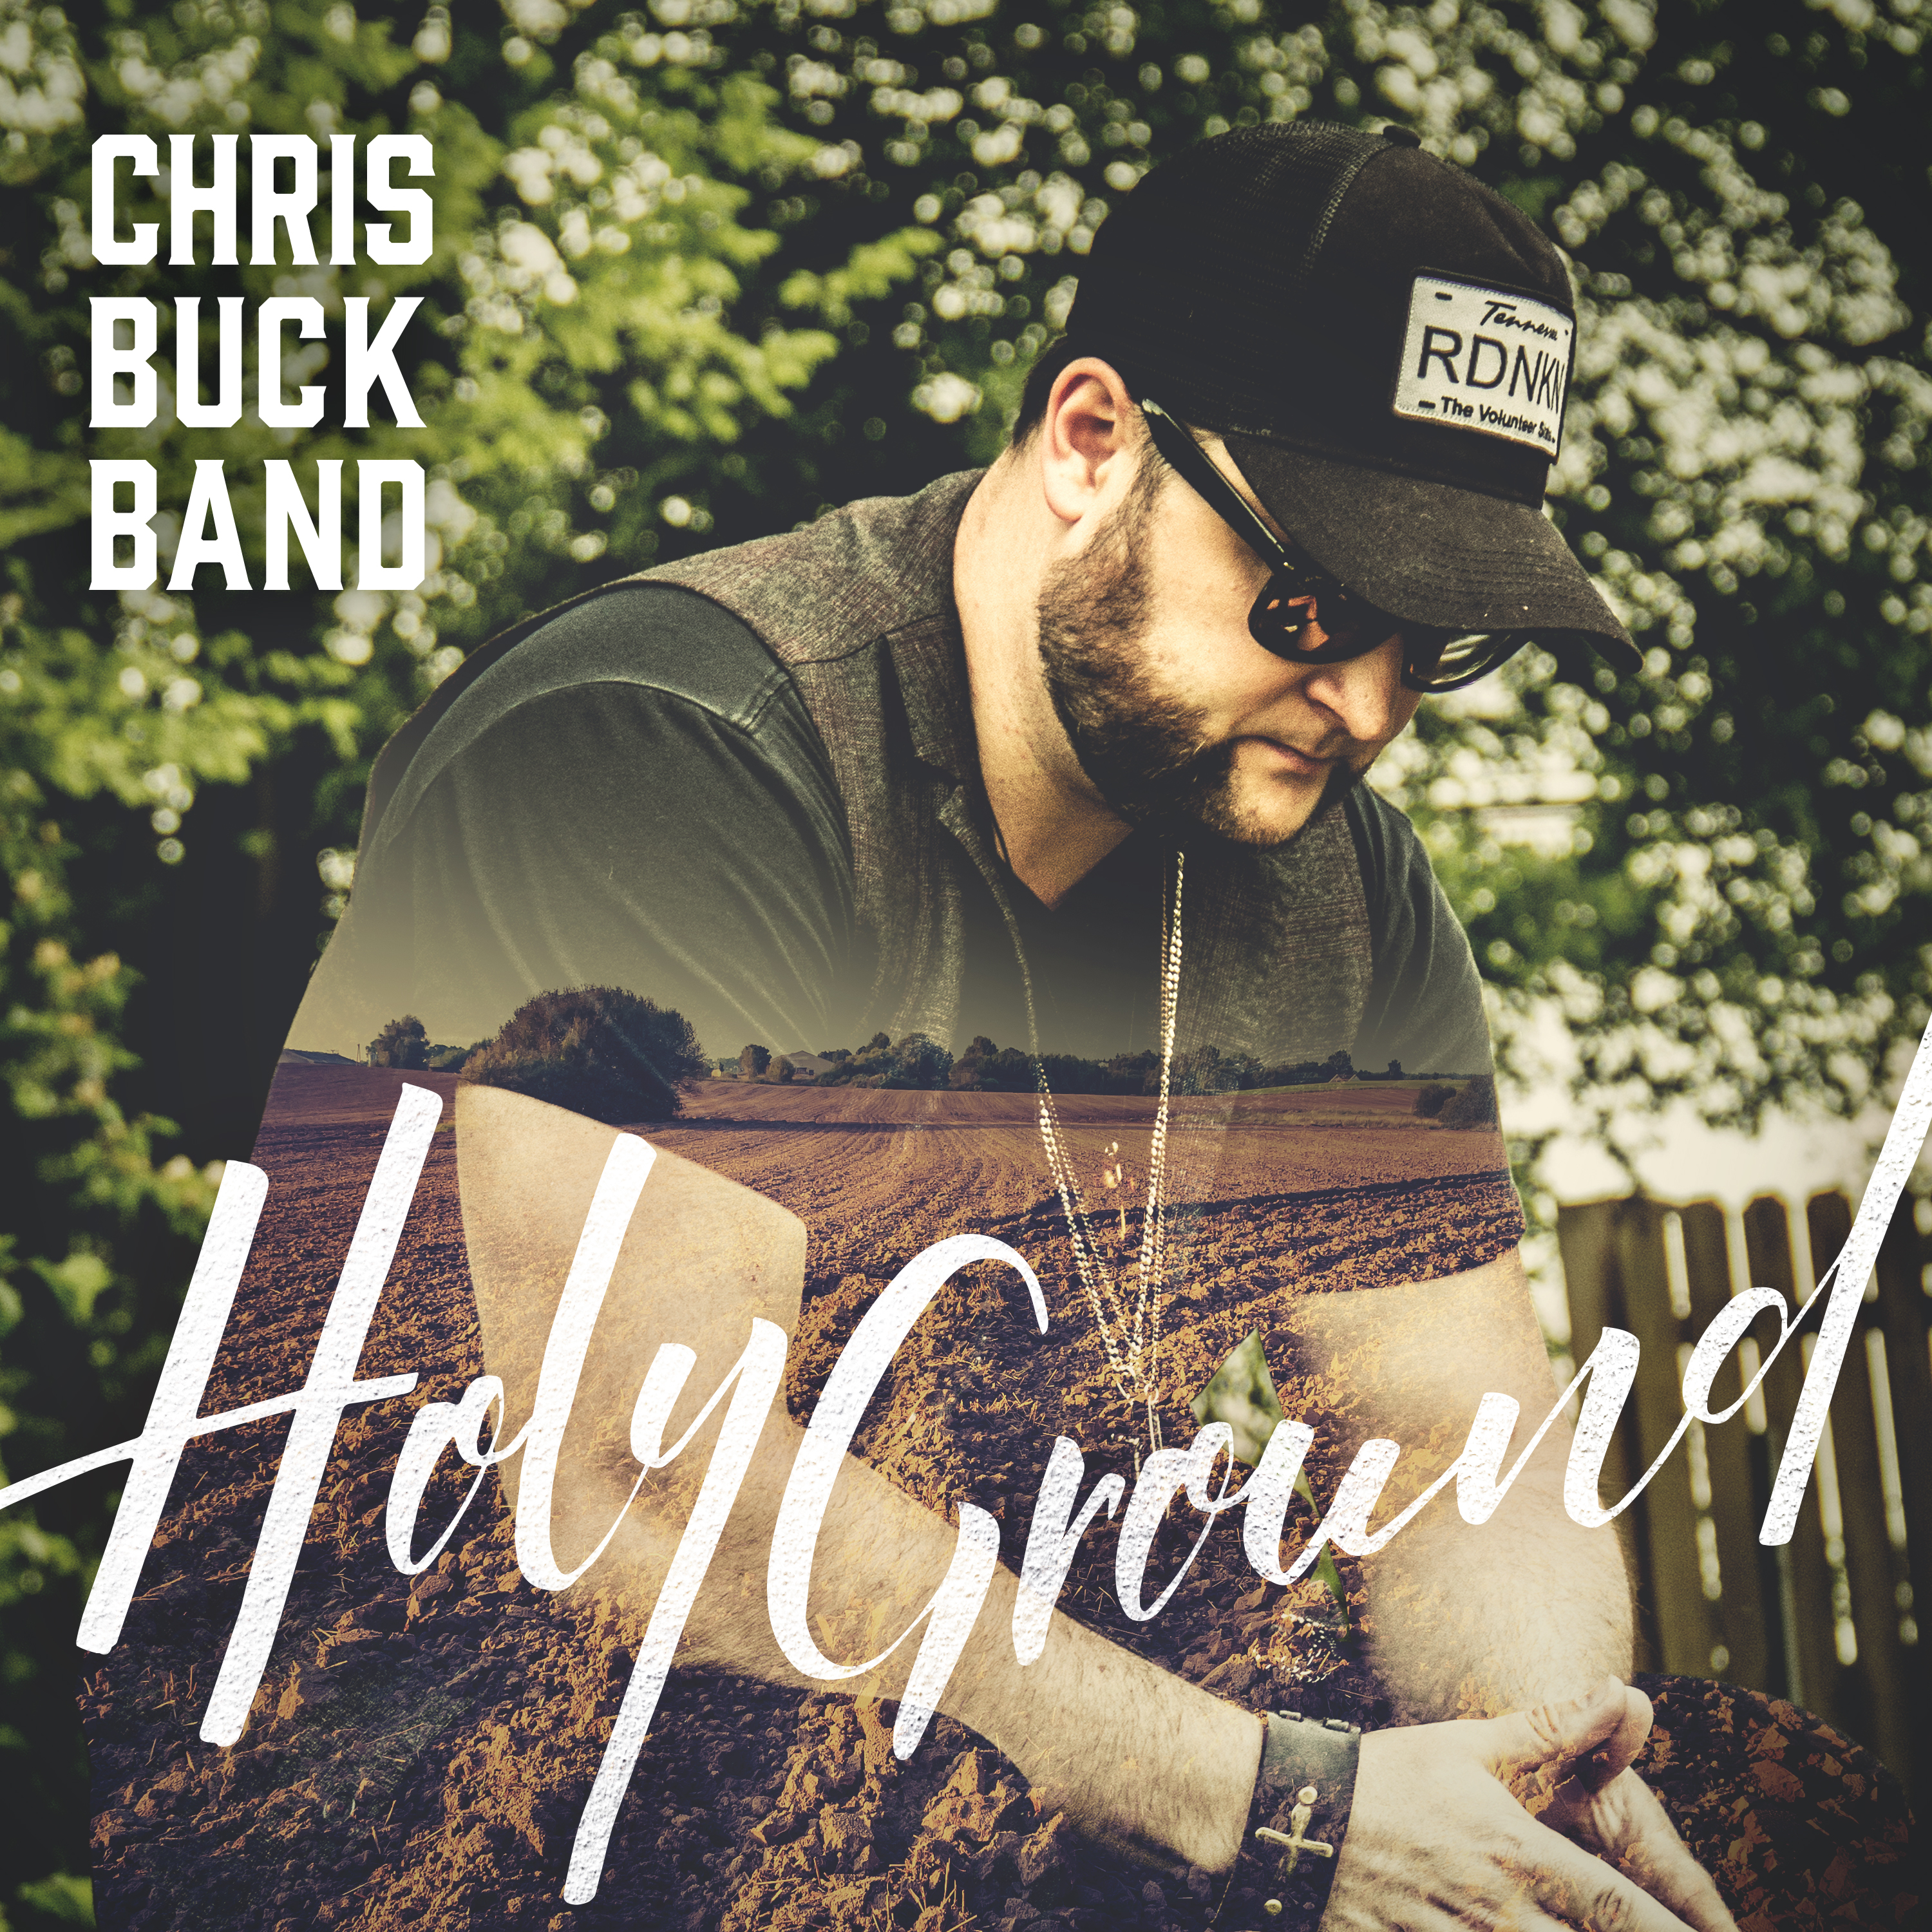 Chris Buck Band – New Single #HolyGround